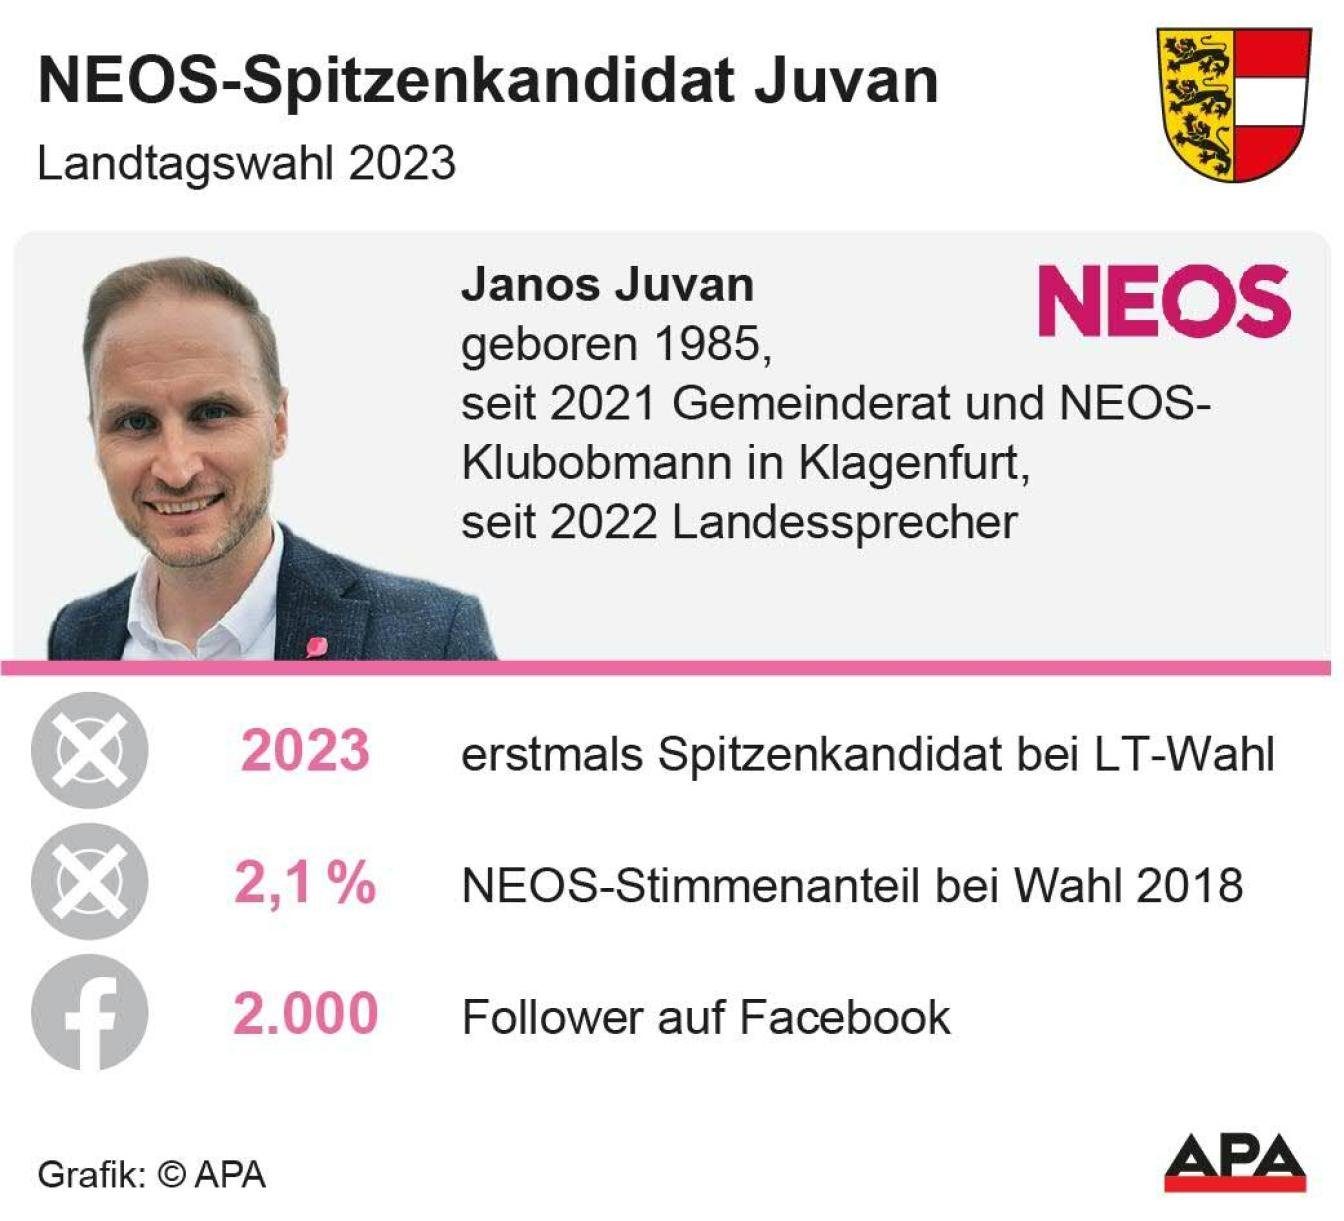 NEOS-Spitzenkandidat Janos Juvan